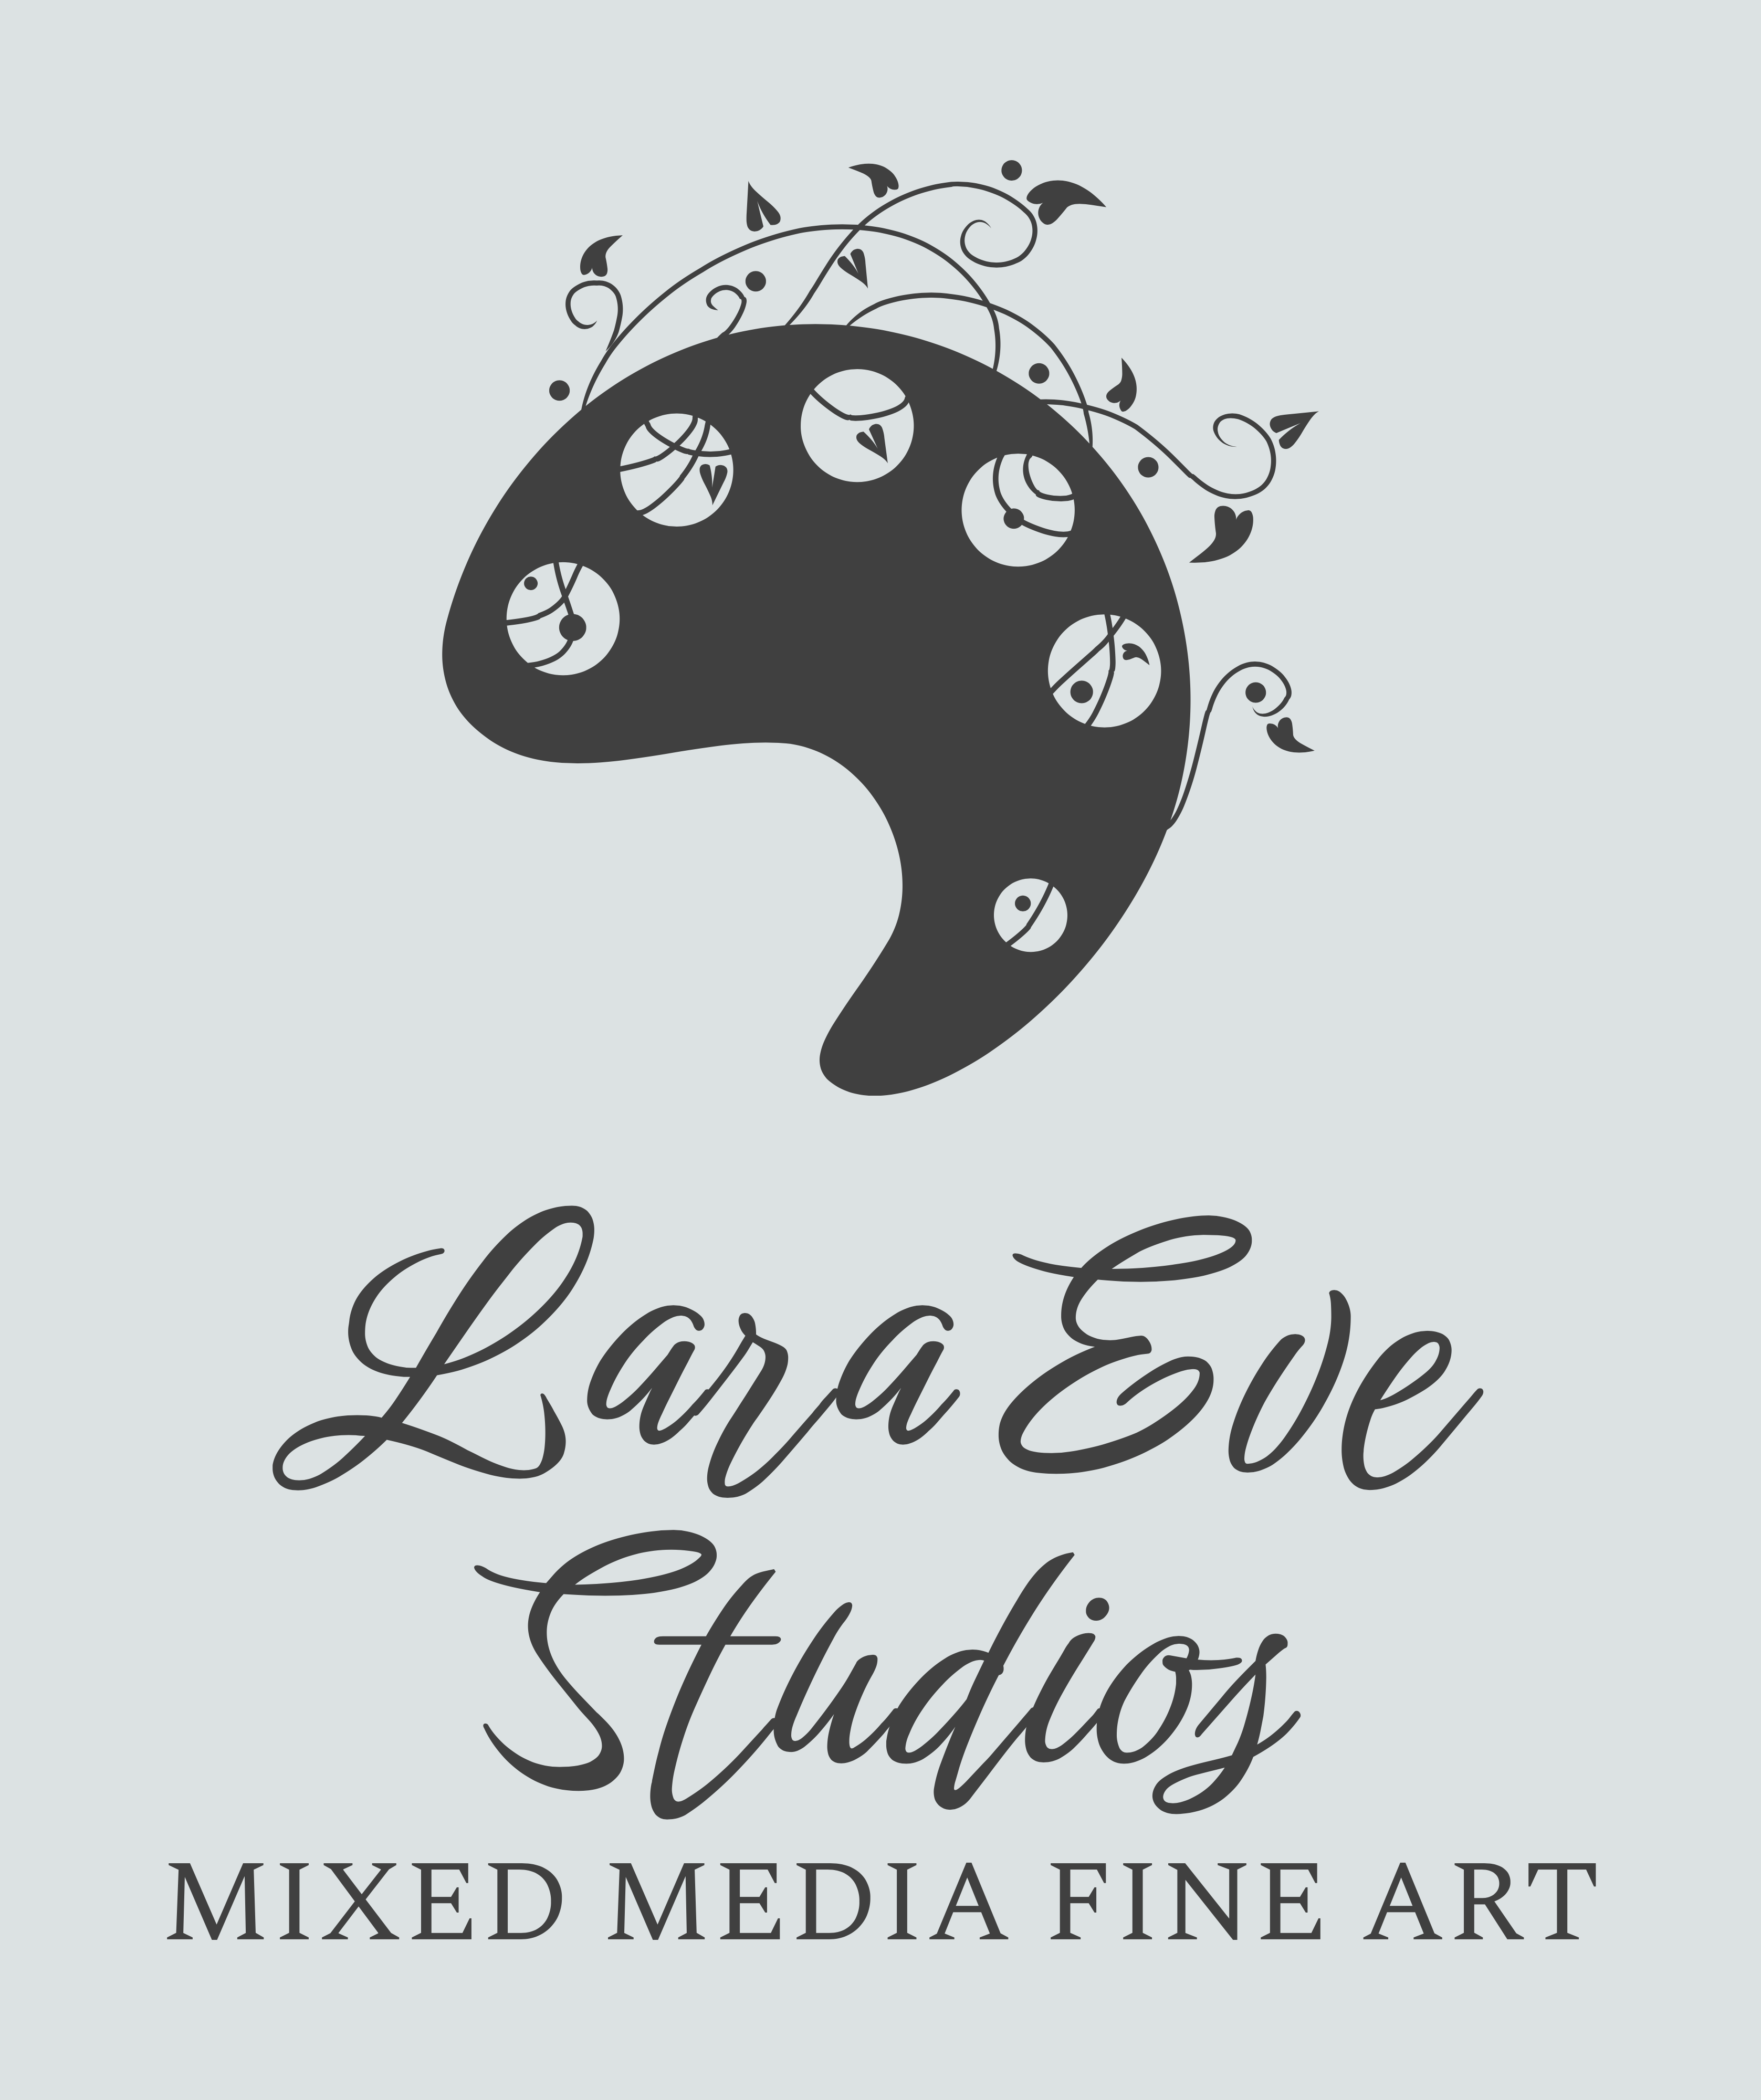 Lara Eve Studios